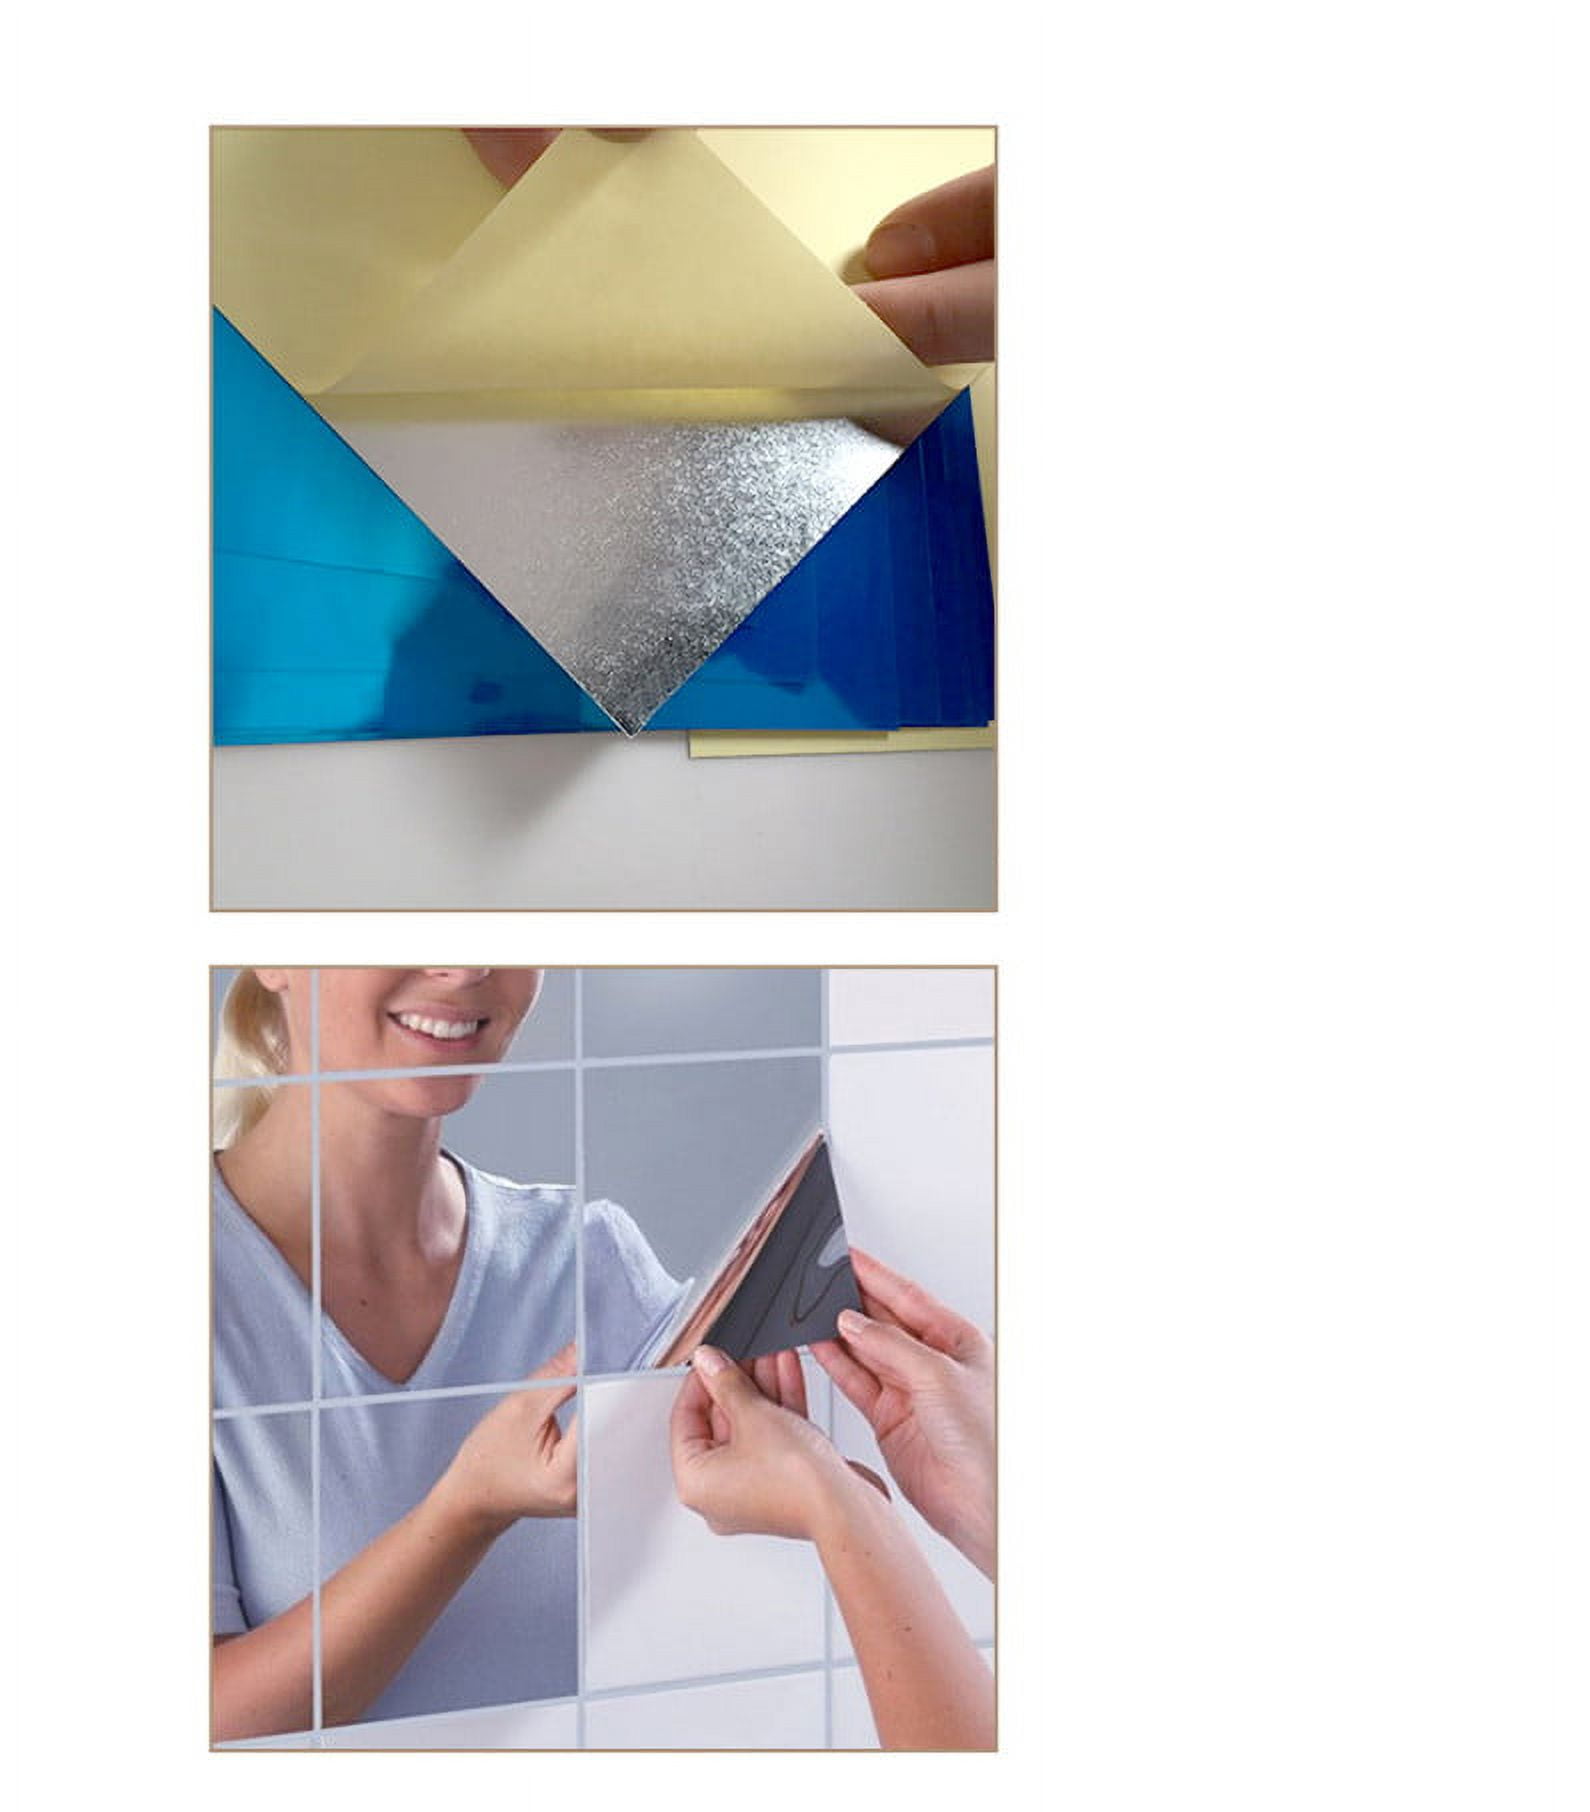 Retap 3D 6/12x Square Mirror Tiles Wall Stickers Self Adhesive